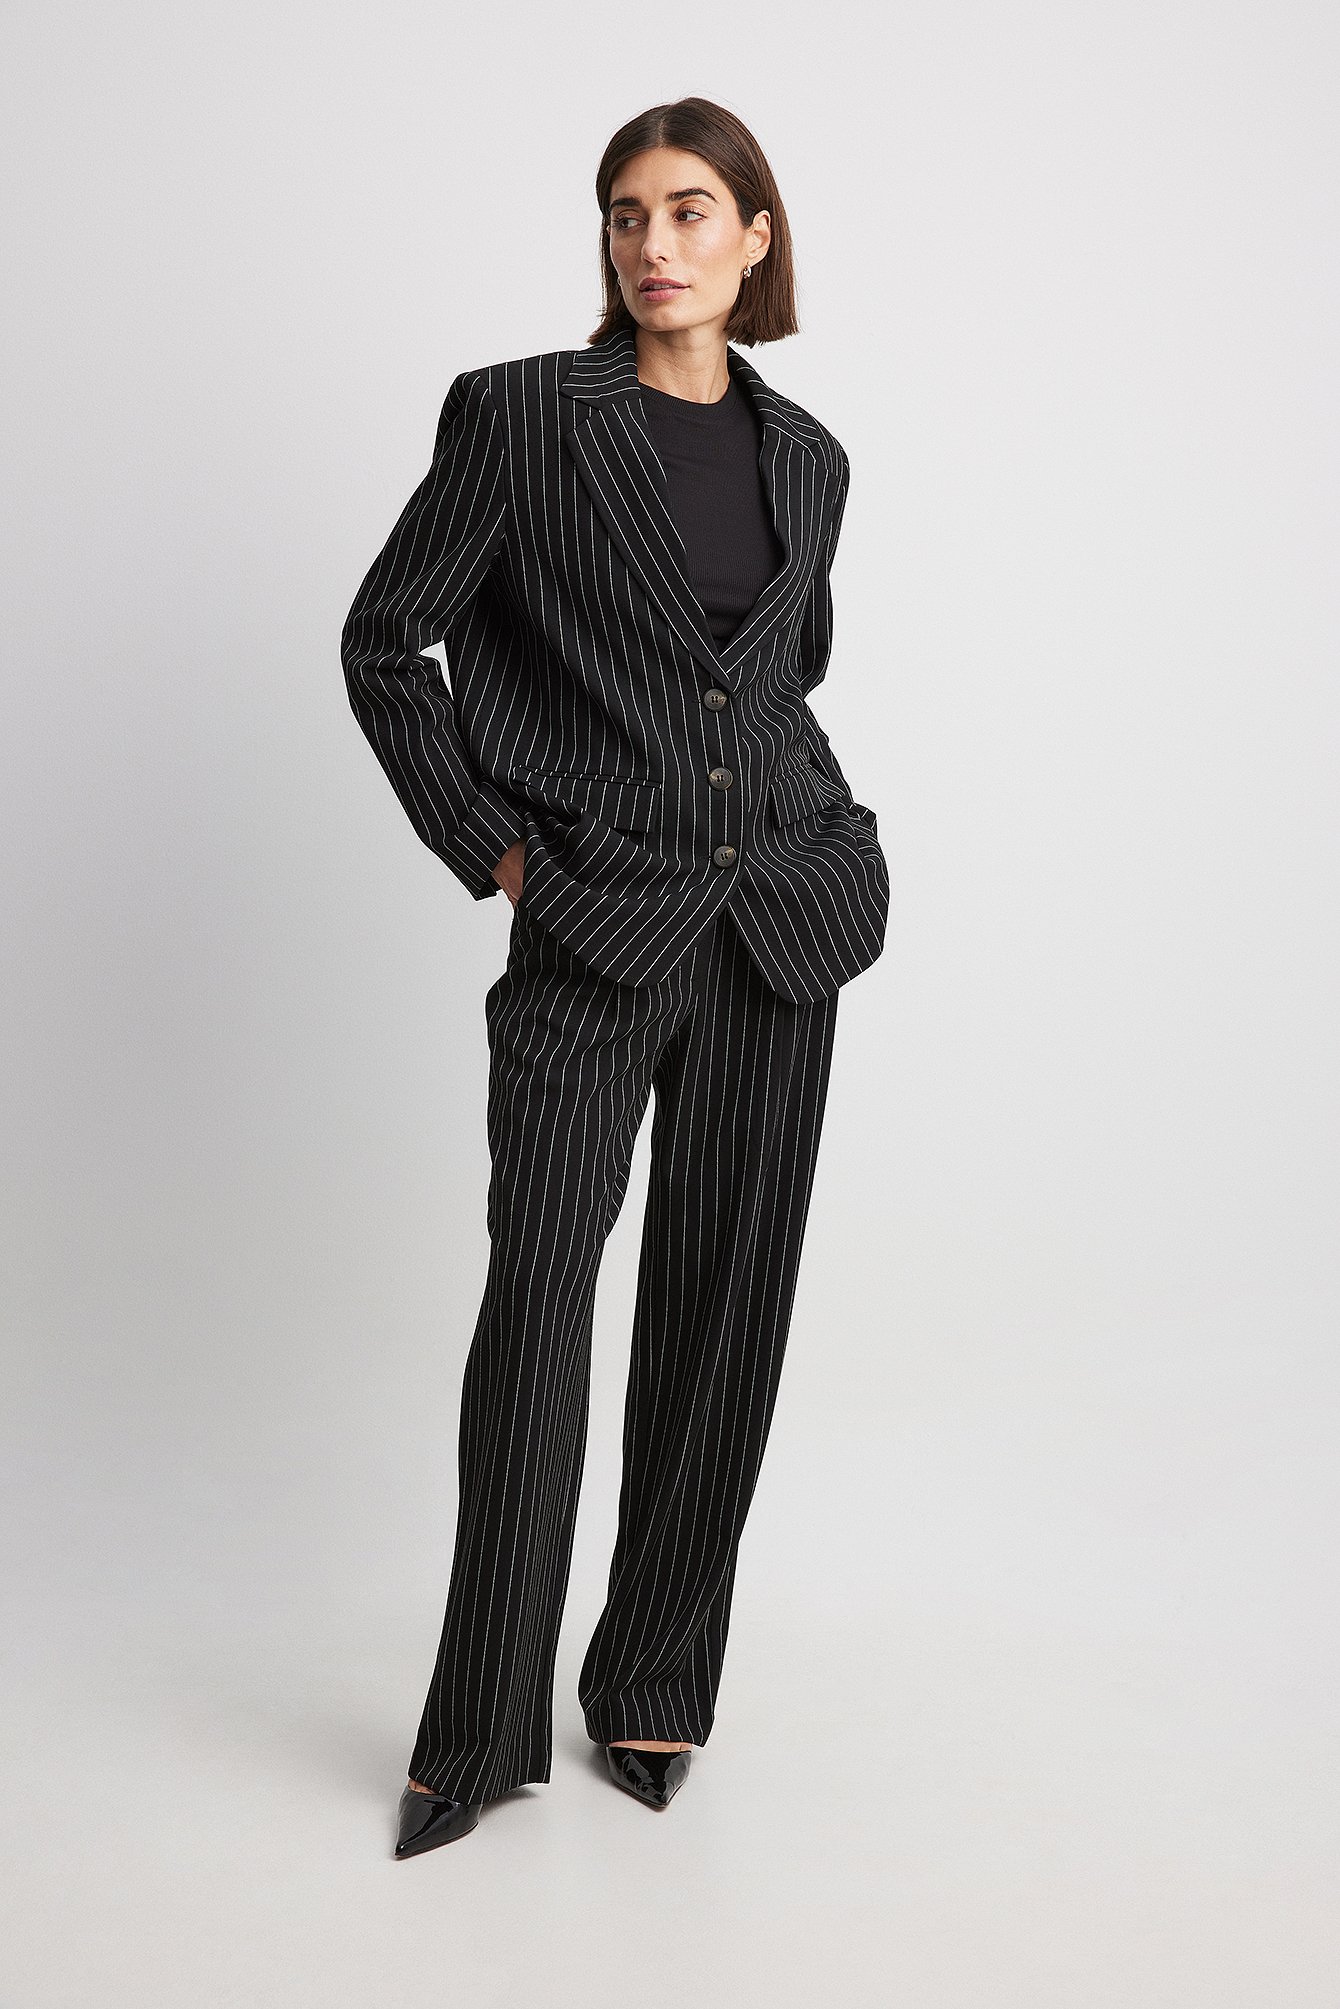 Chic Women's Black White Striped Suit Tops Slim OL One Button Blazer Jacket  Coat | eBay